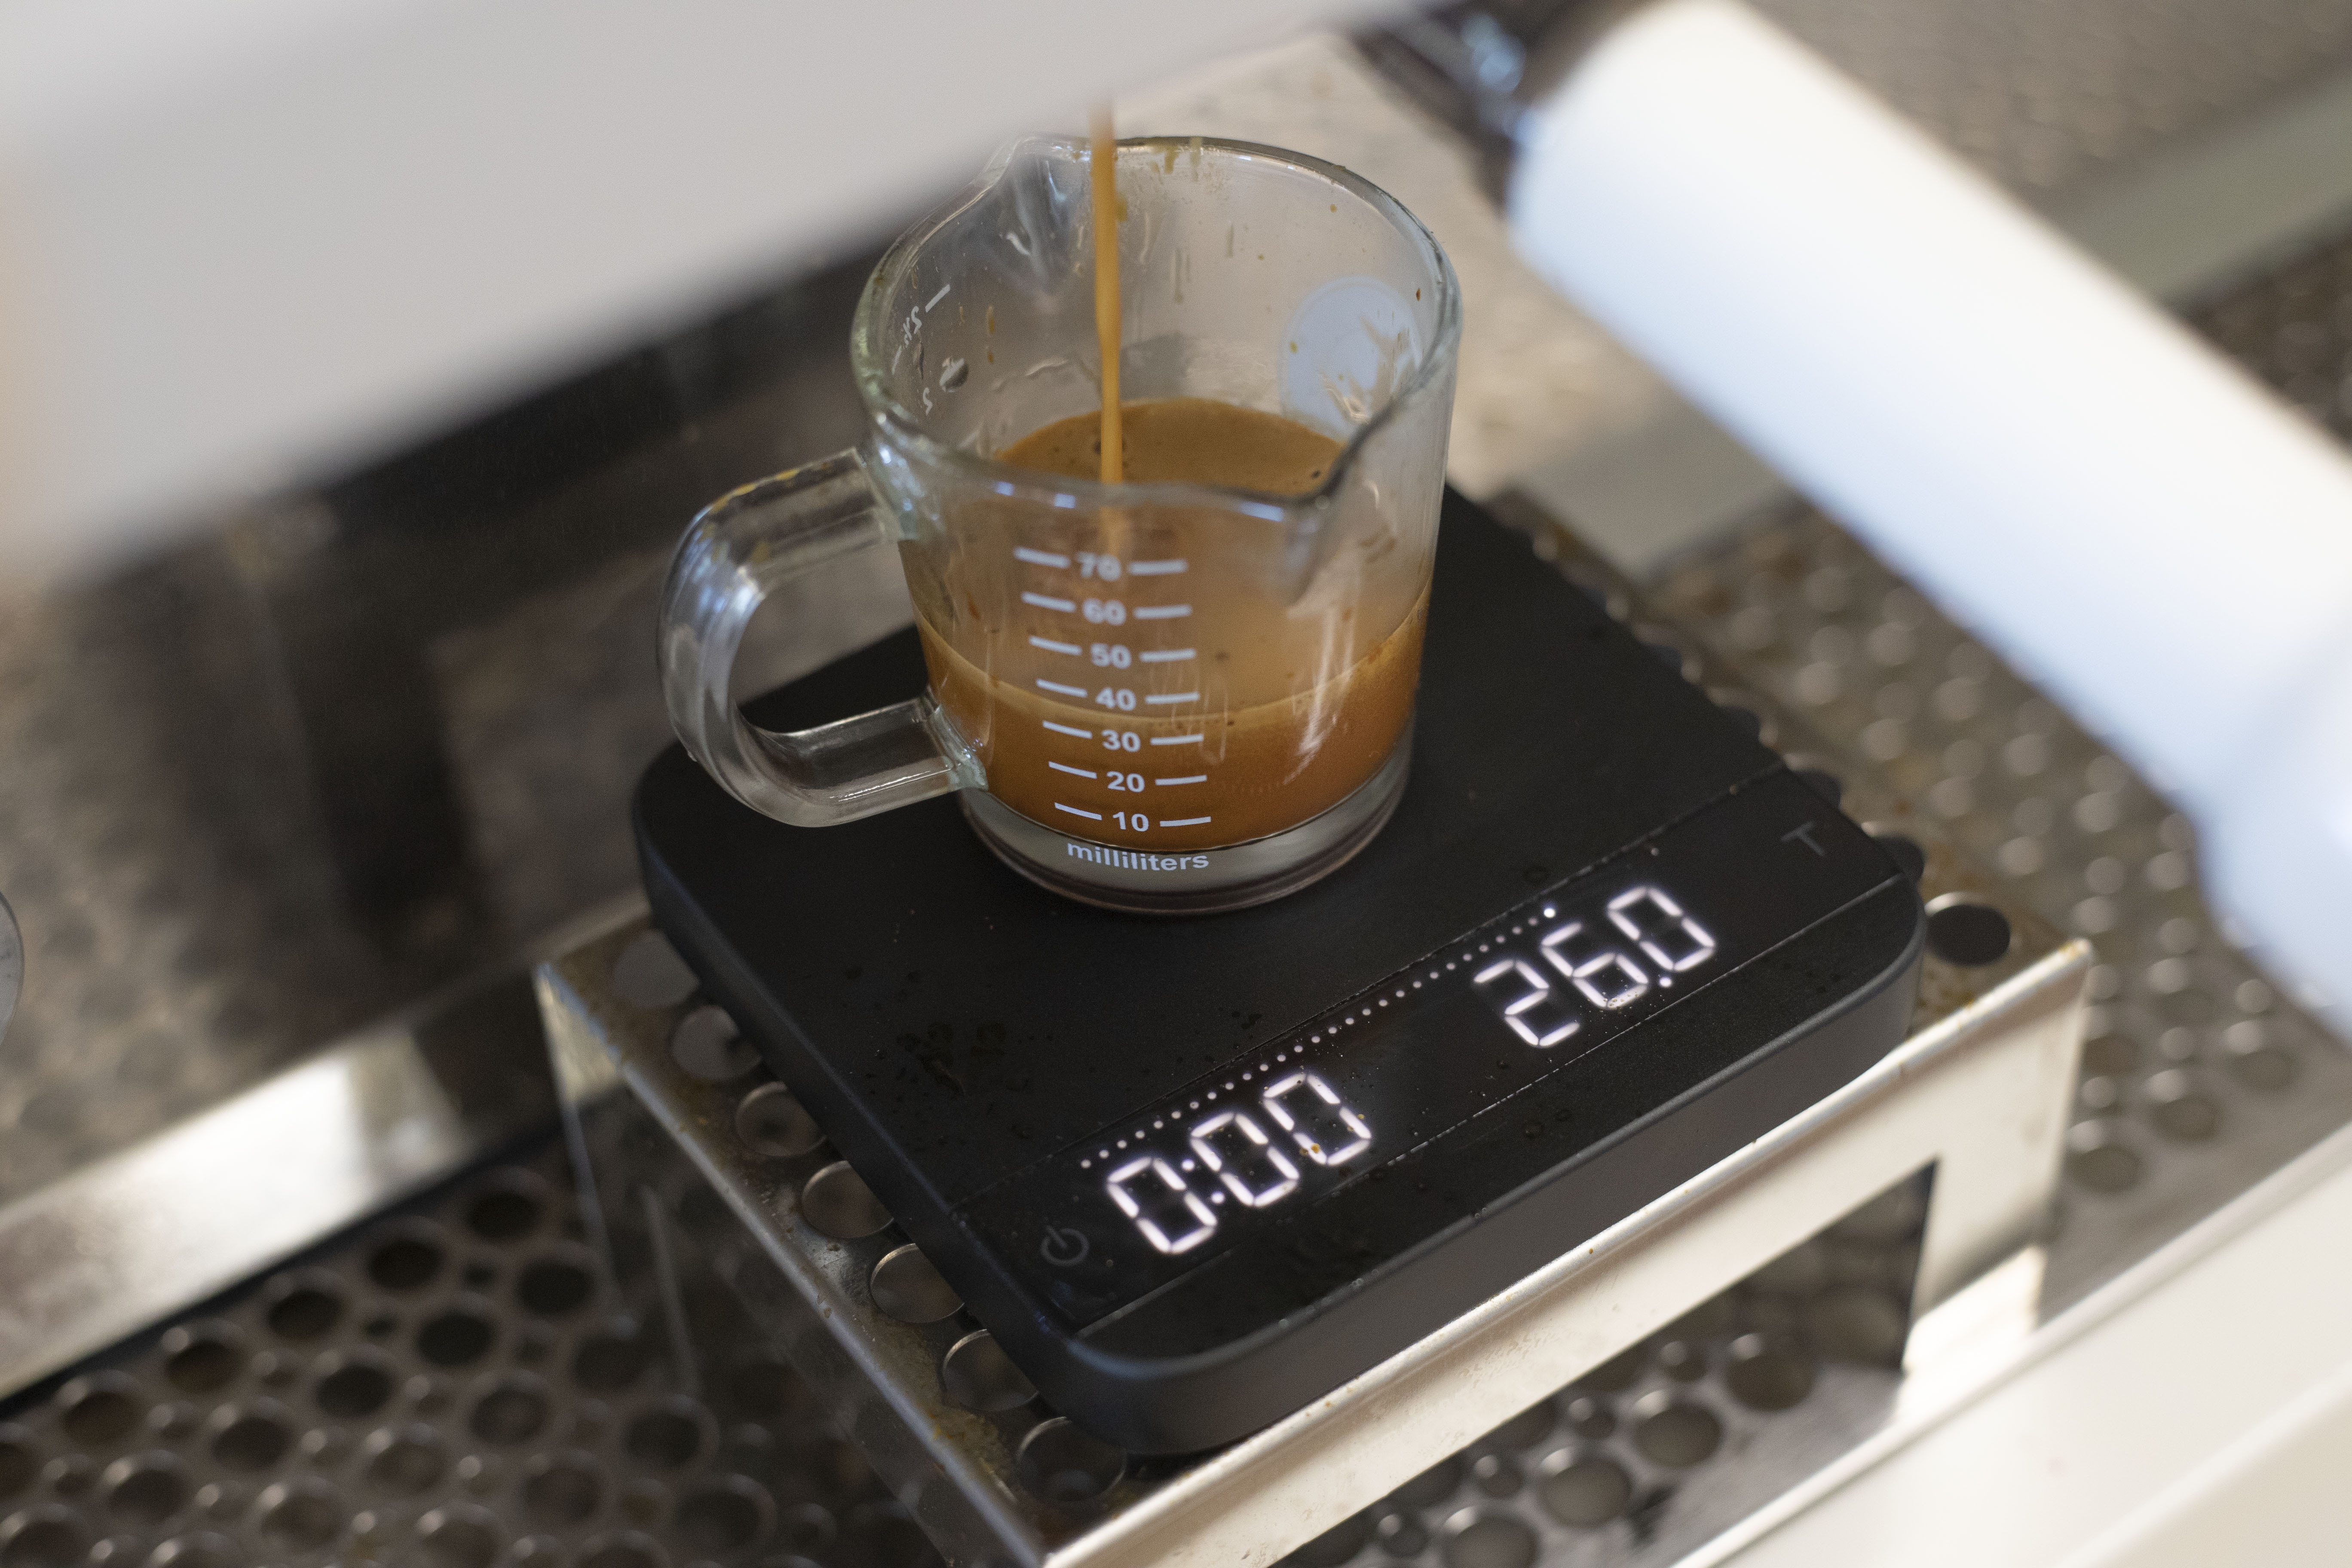 Acaia Lunar Espresso Scale – Whole Latte Love